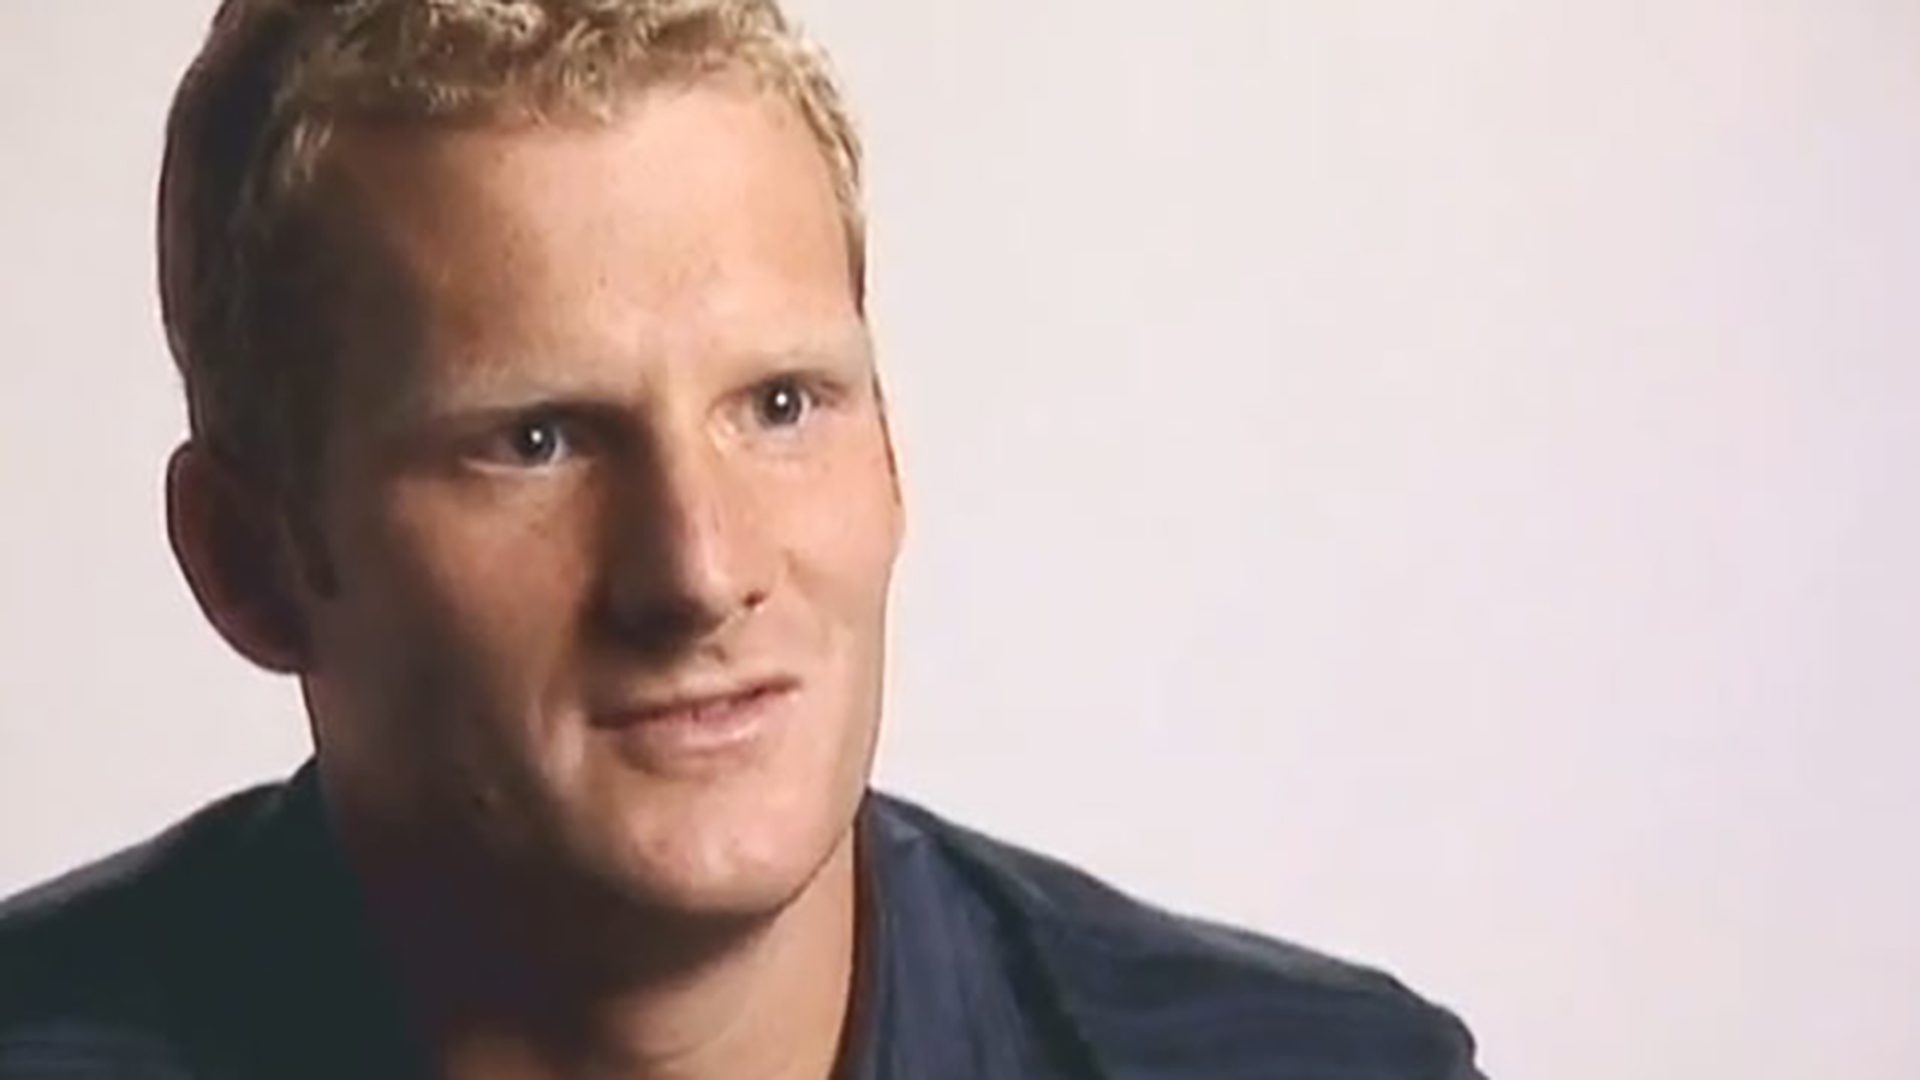 A blond man wearing a dark shirt is interviewed against a white background